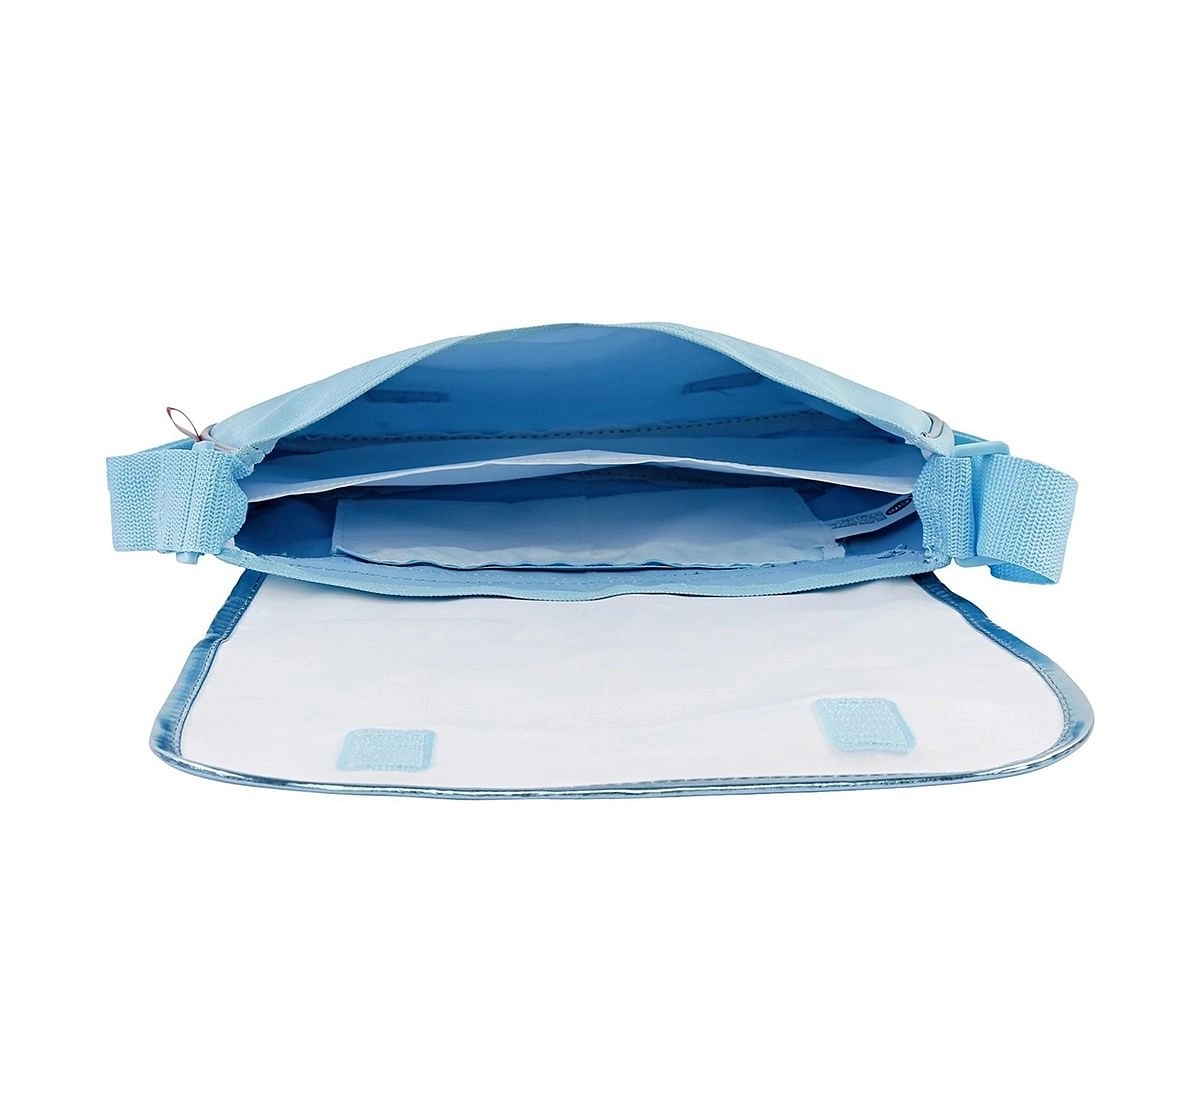  Simba Color Me Mine Sequin Round Messenger Bag - Frozen, Blue DIY Art & Craft Kits for Kids age 6Y+ 